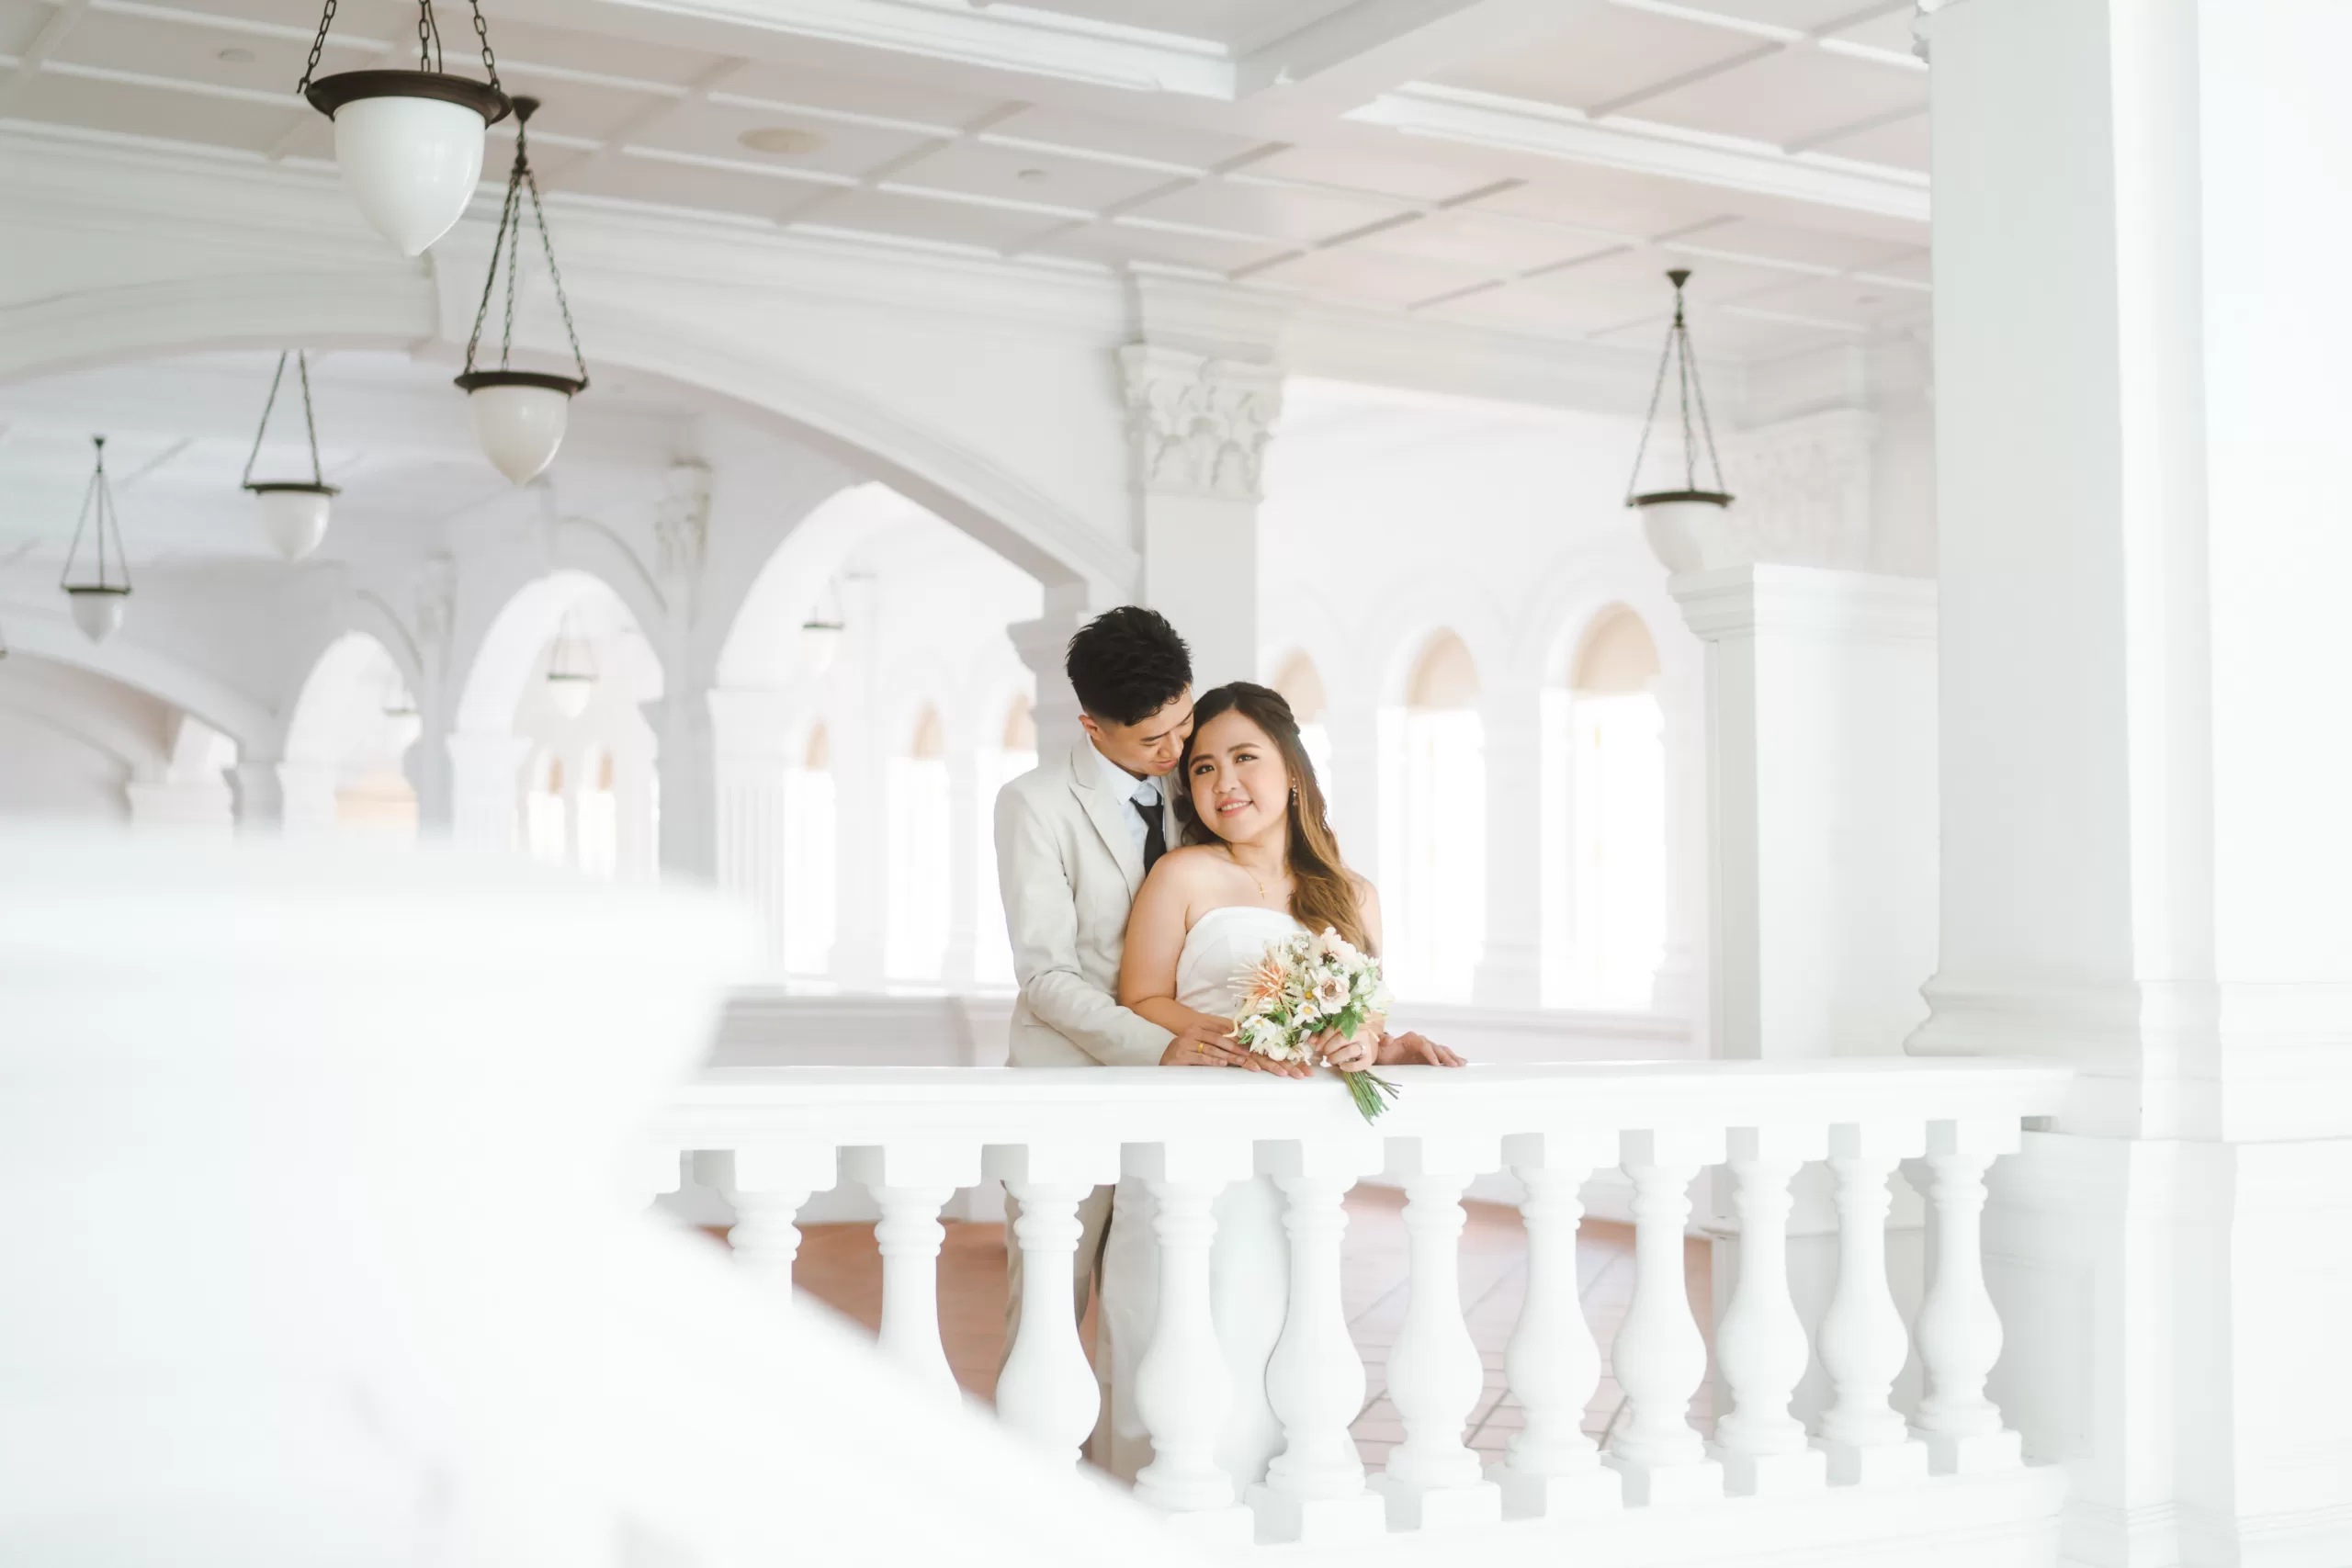 Pre-wedding photoshoot at Raffles Hotel, Singapore